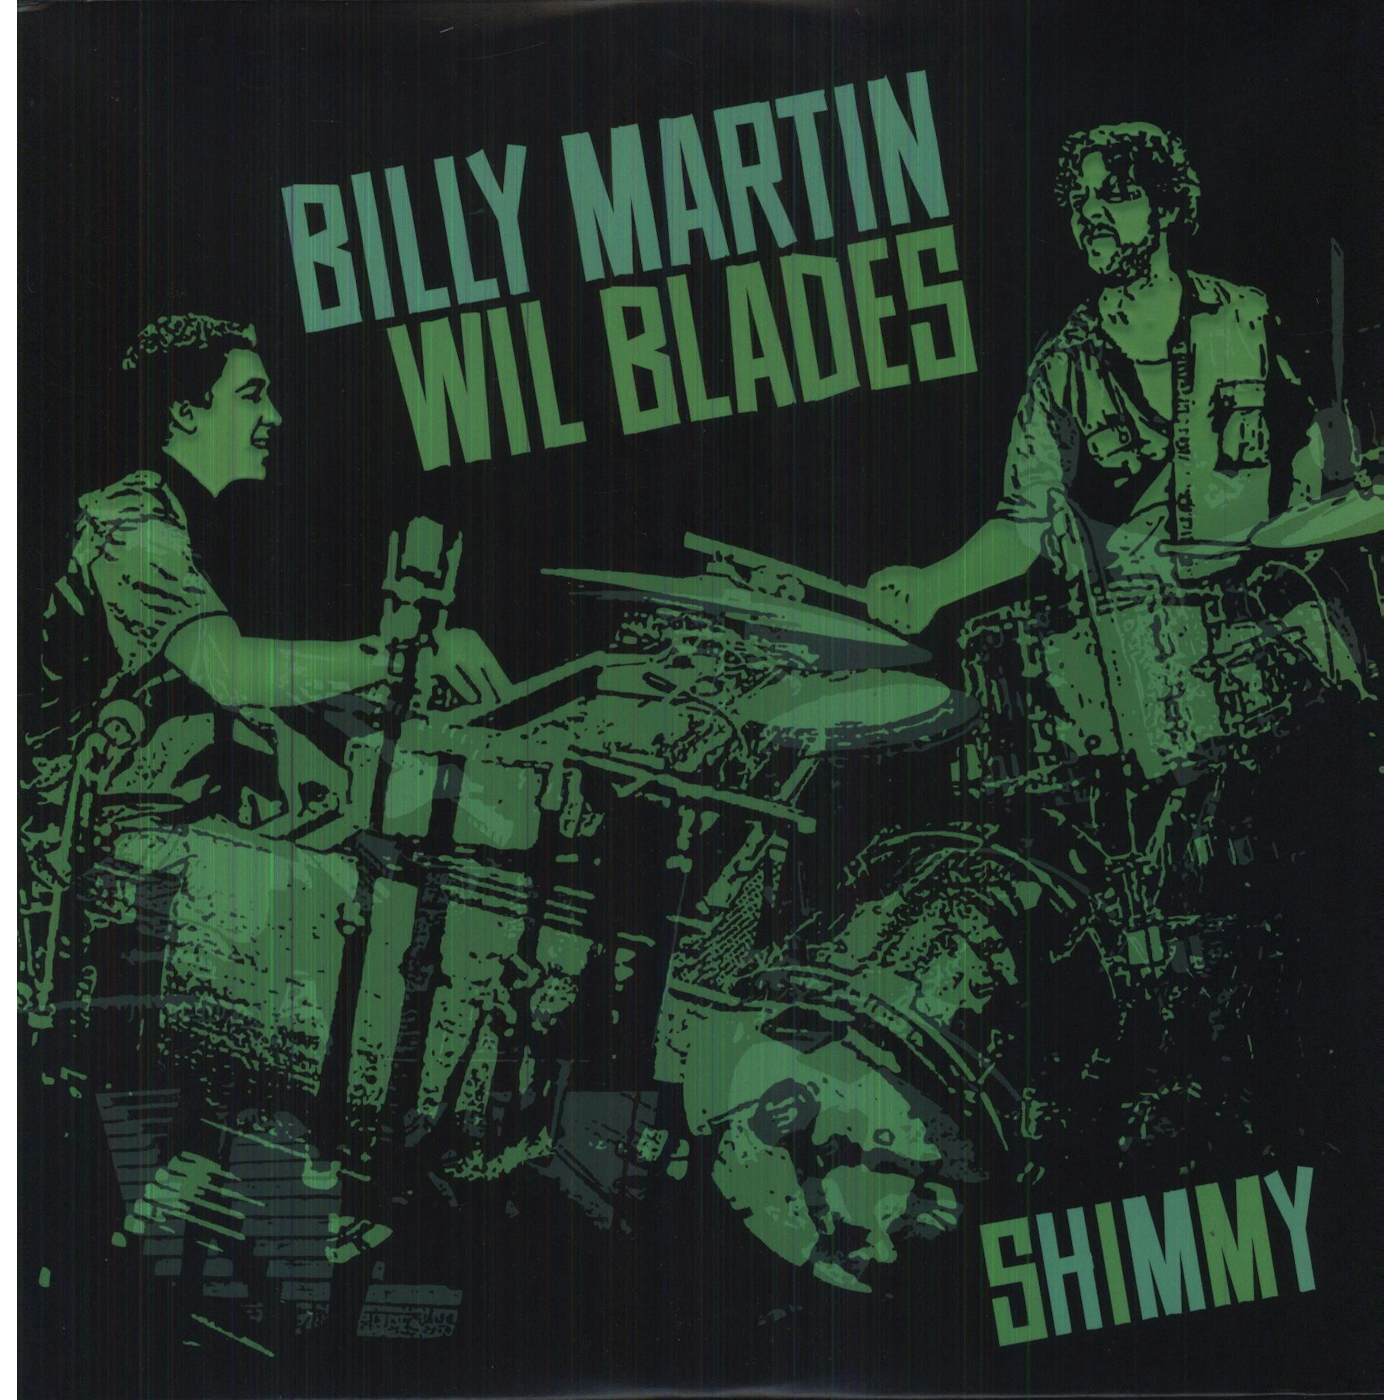 Billy Martin / Wil Blades SHIMMY Vinyl Record